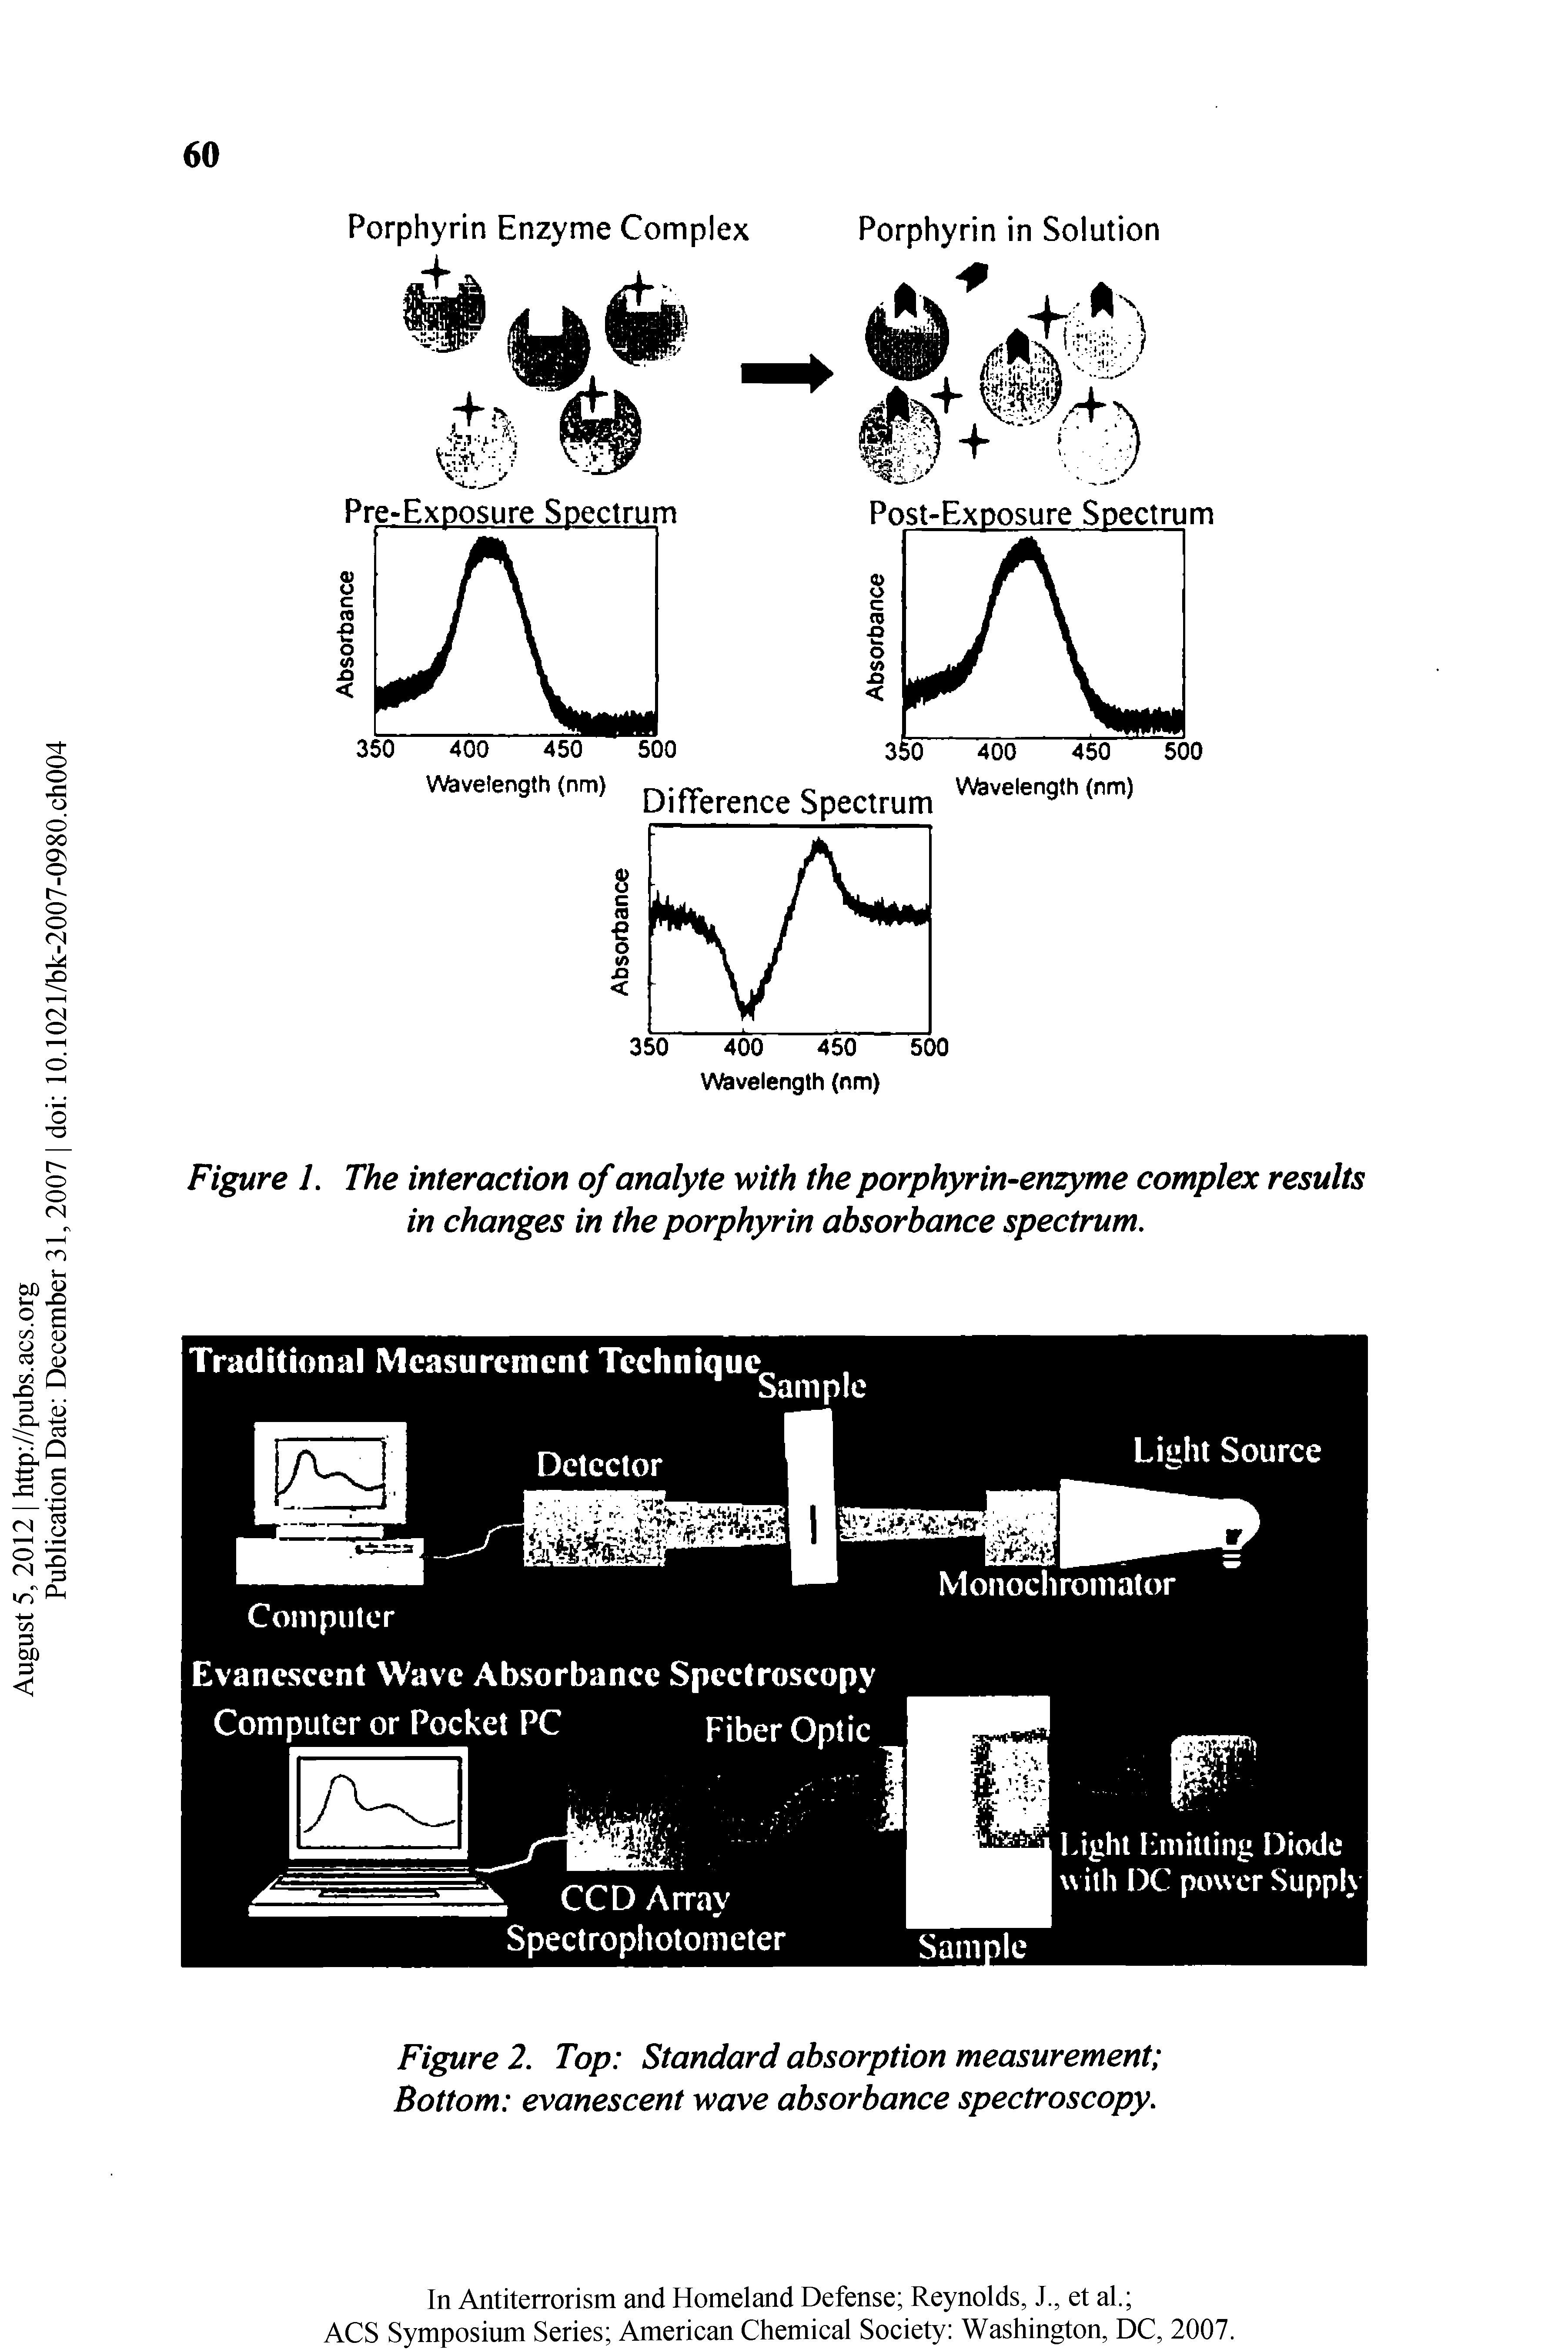 Figure . Top Standard absorption measurement Bottom evanescent wave absorbance spectroscopy.